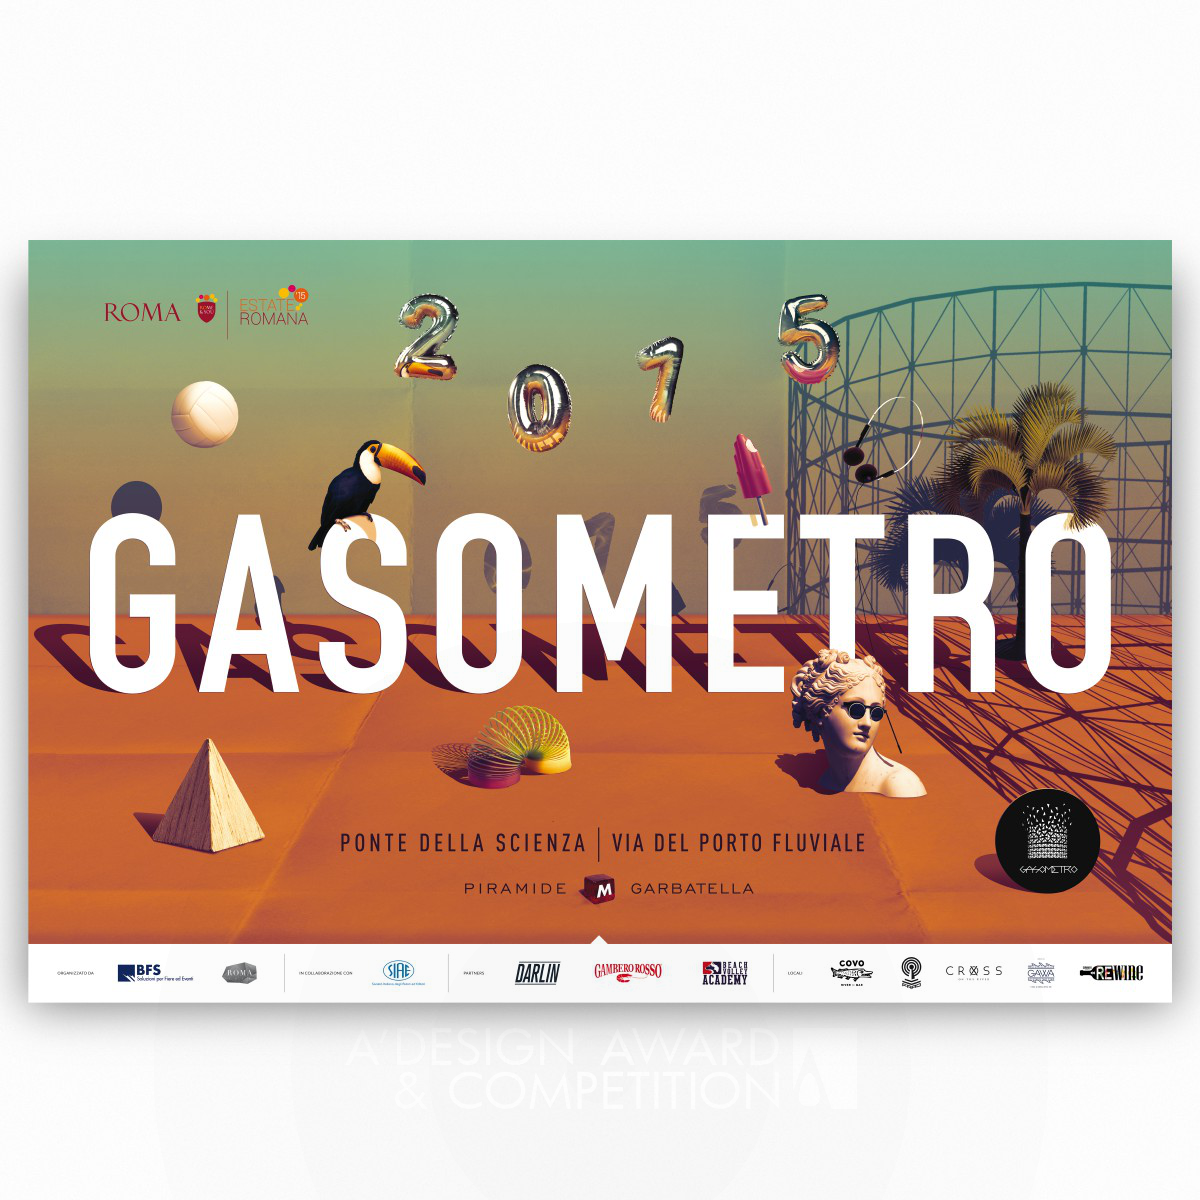 Gasometro 2015 Advertising by Alessandro De Marco